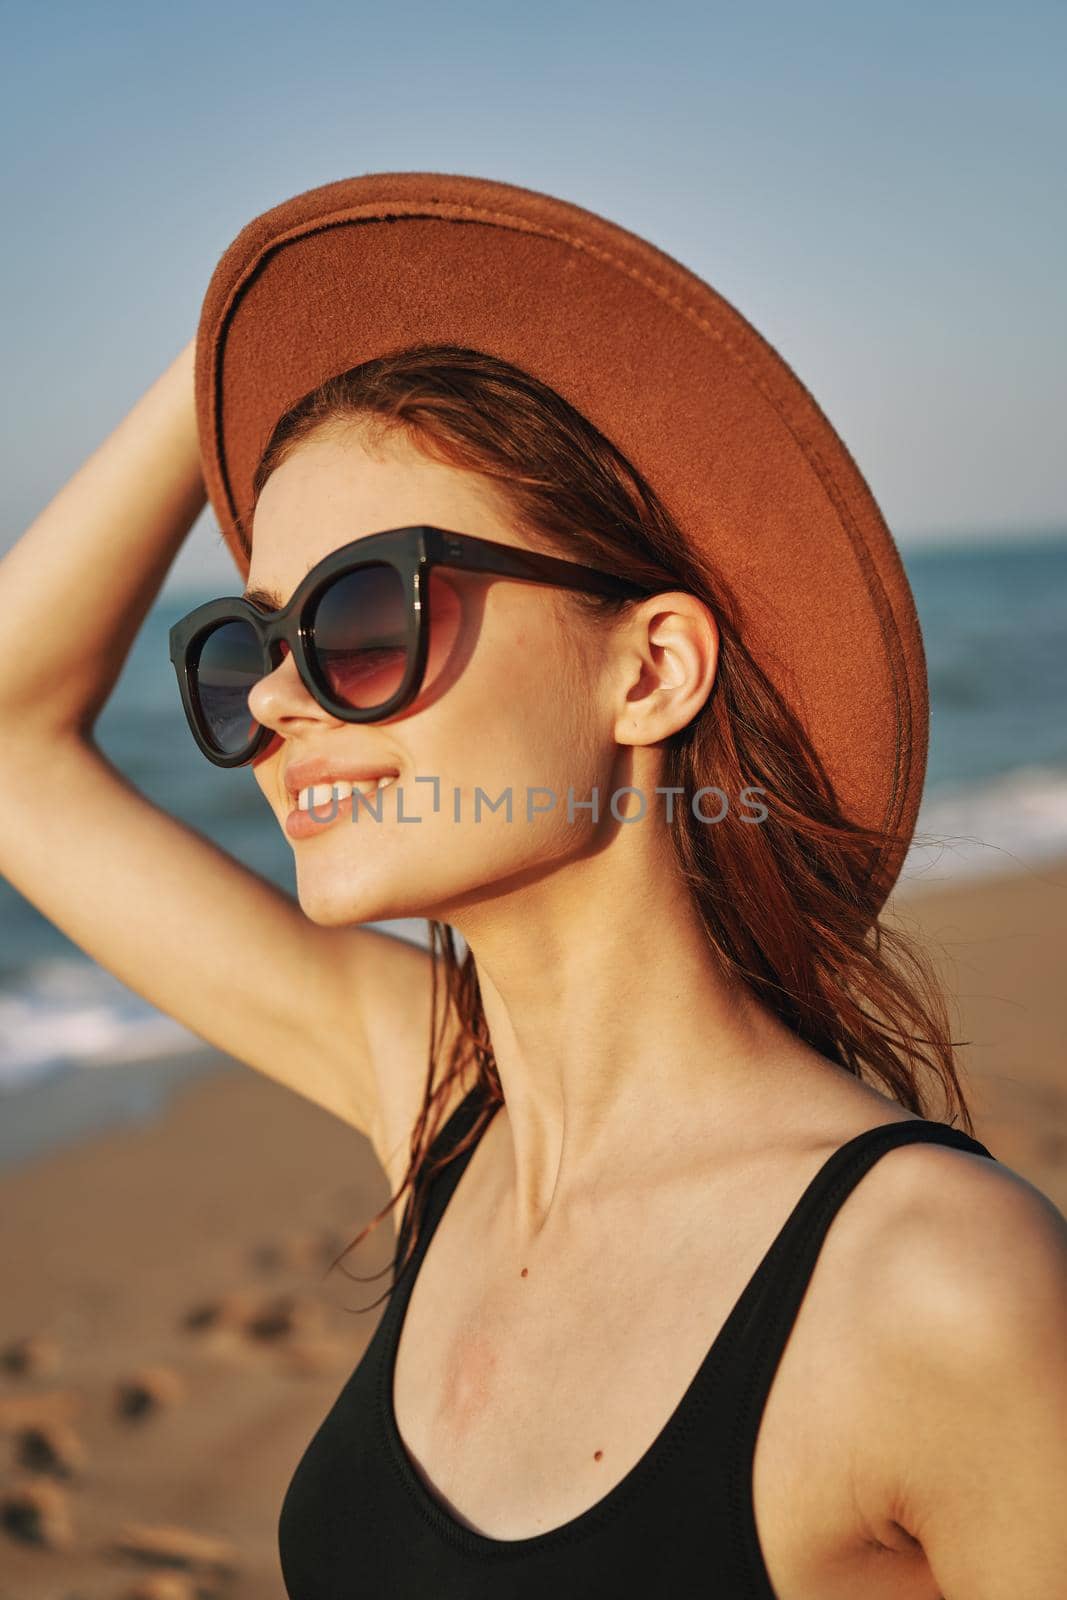 cheerful woman in sunglasses Sandy coast landscape sun. High quality photo